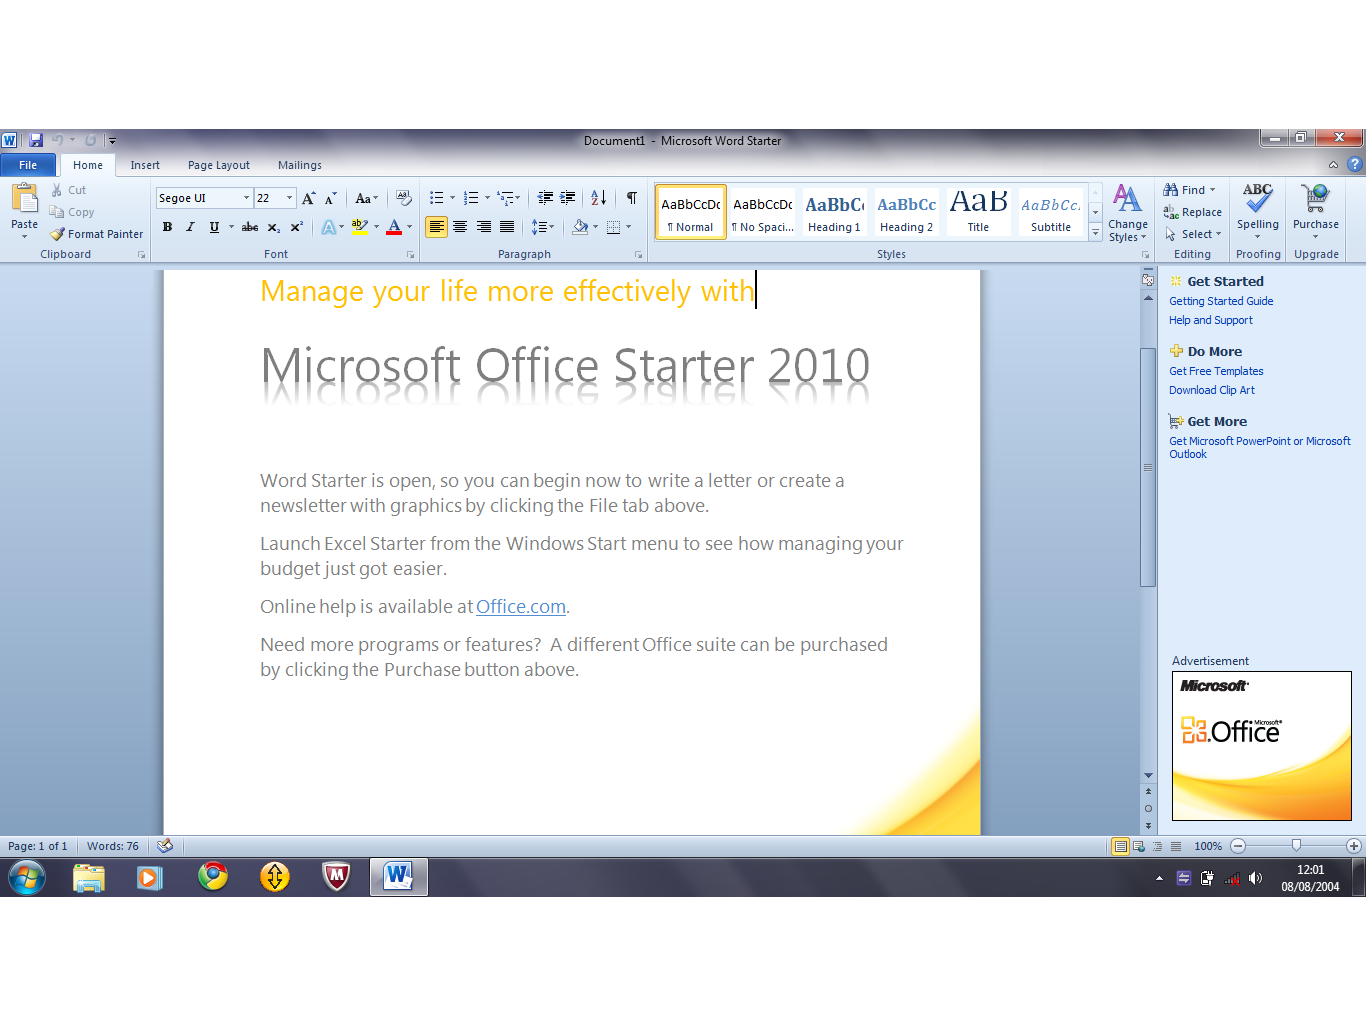 Open Microsoft Word Starter 2010